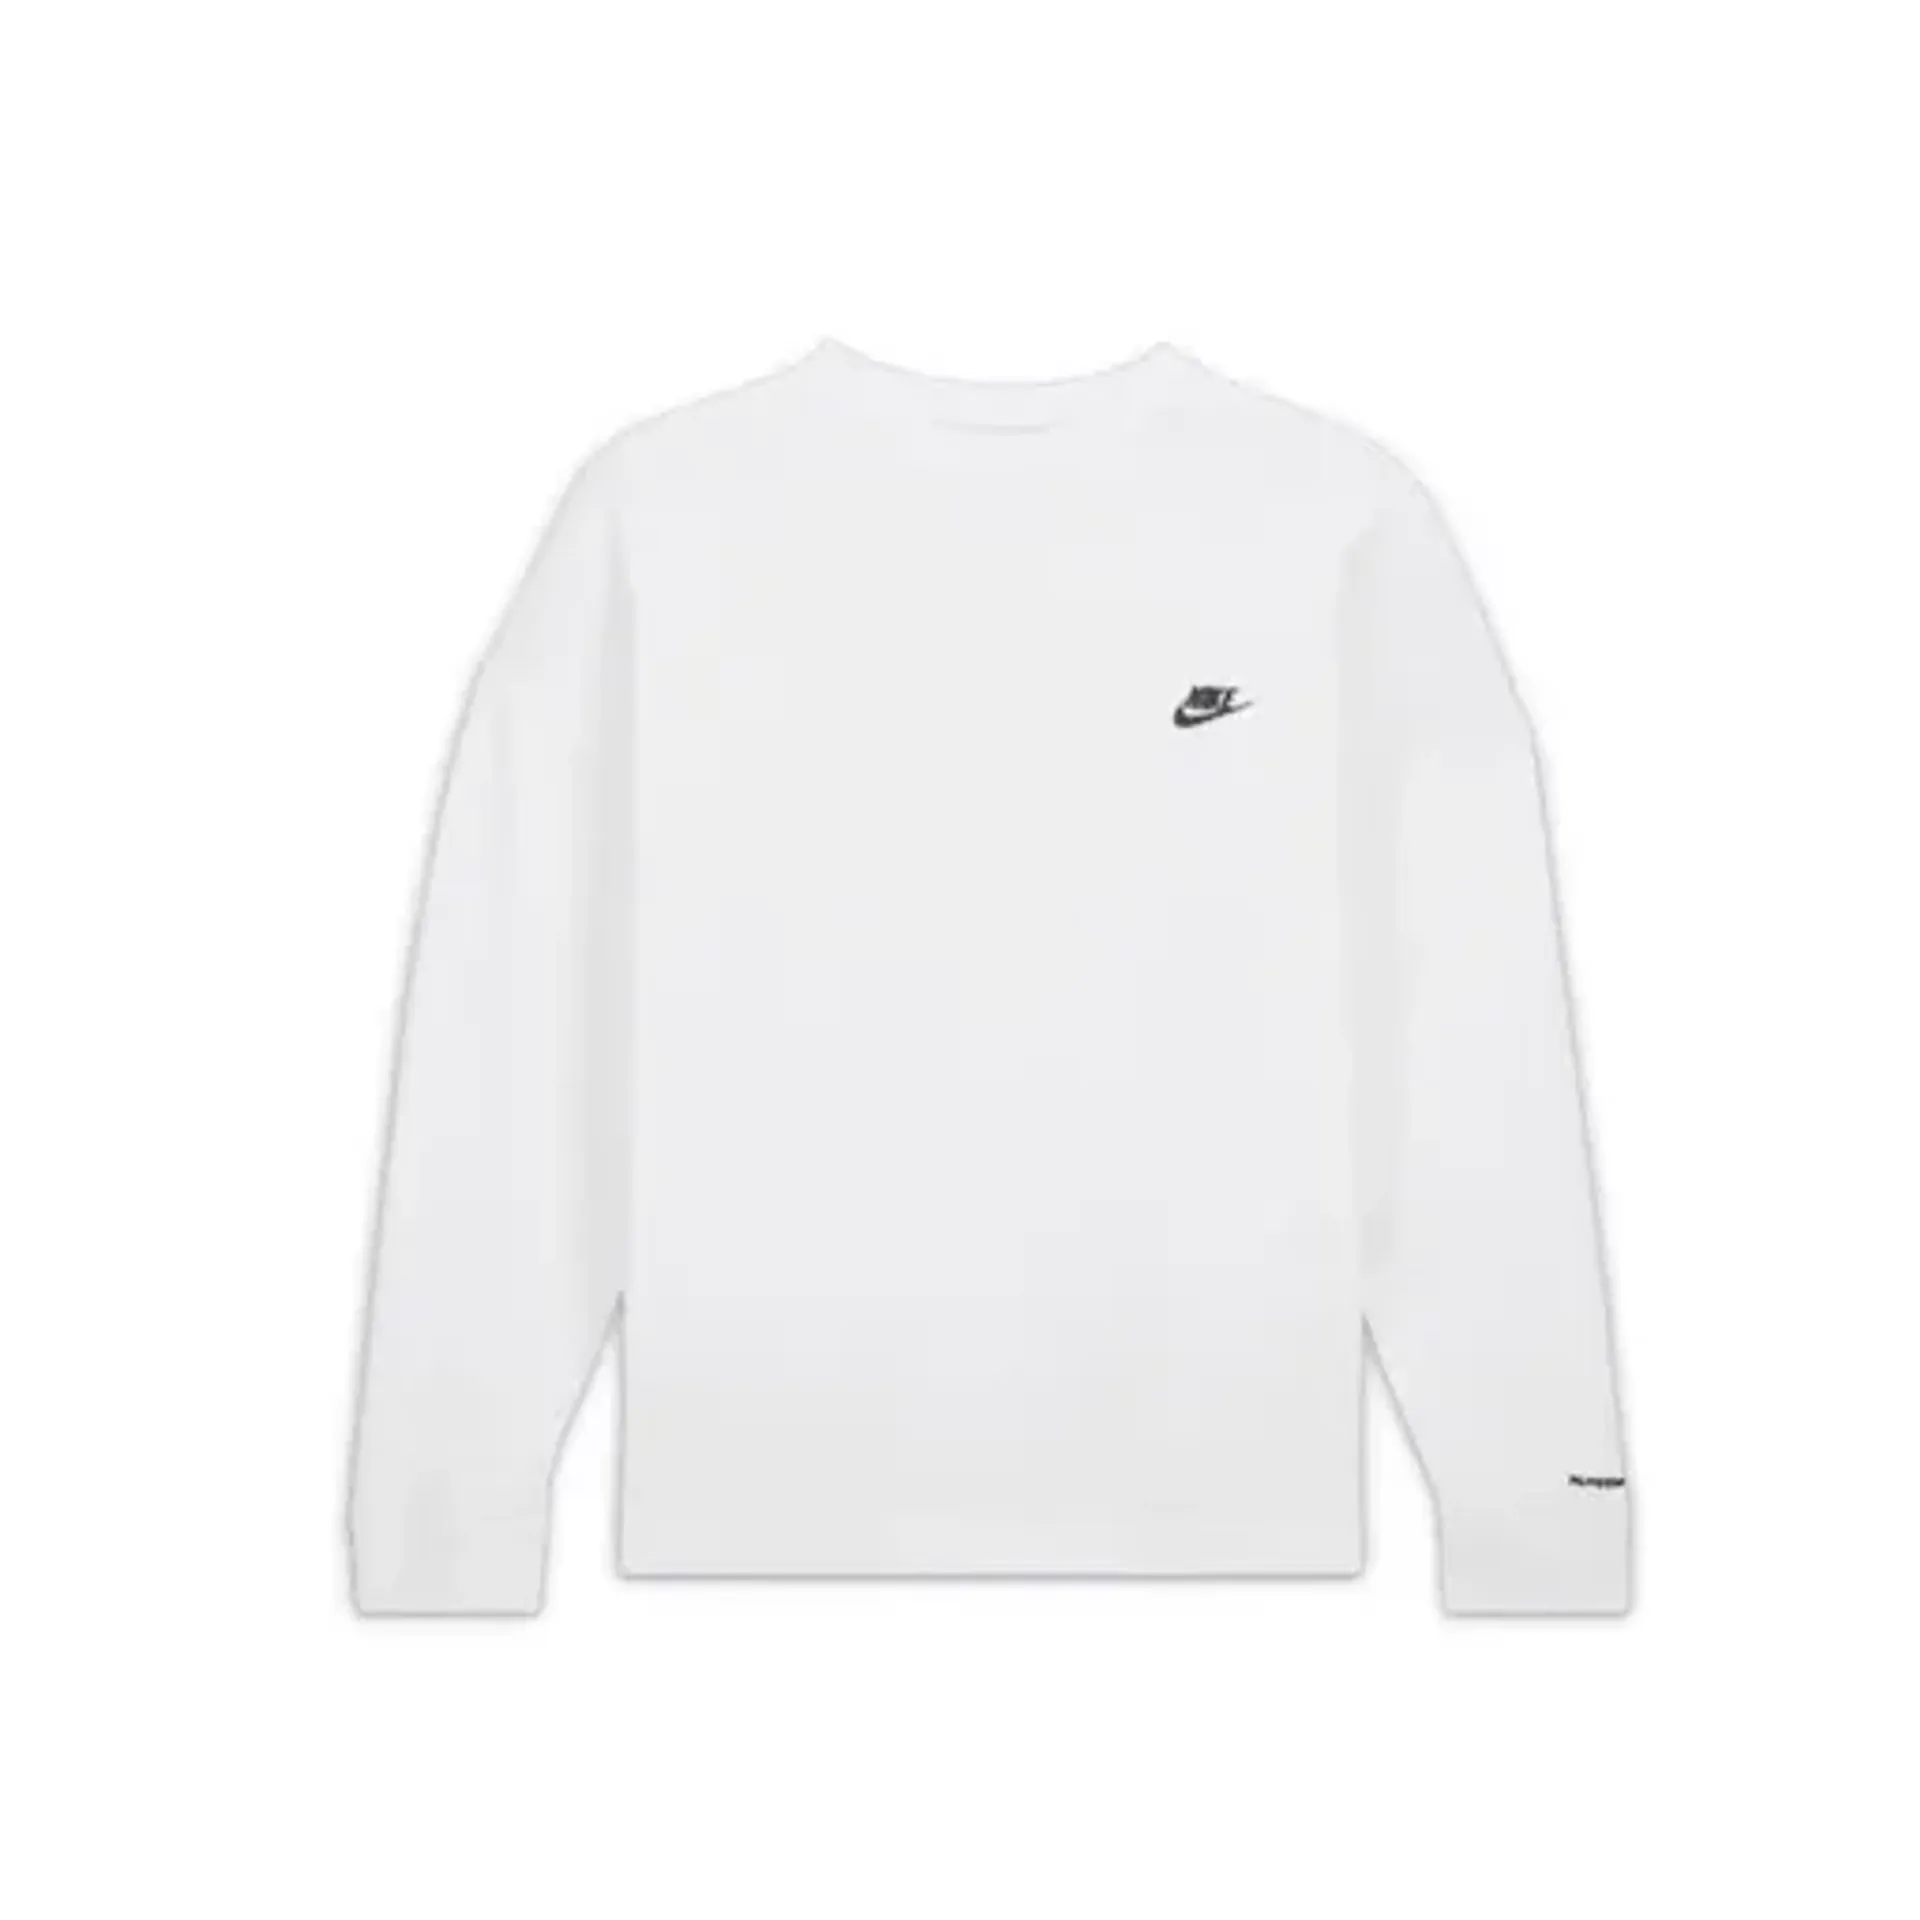 Nike x PEACEMINUSONE G-Dragon Long Sleeve T-shirt 'White' (Asia Sizing)